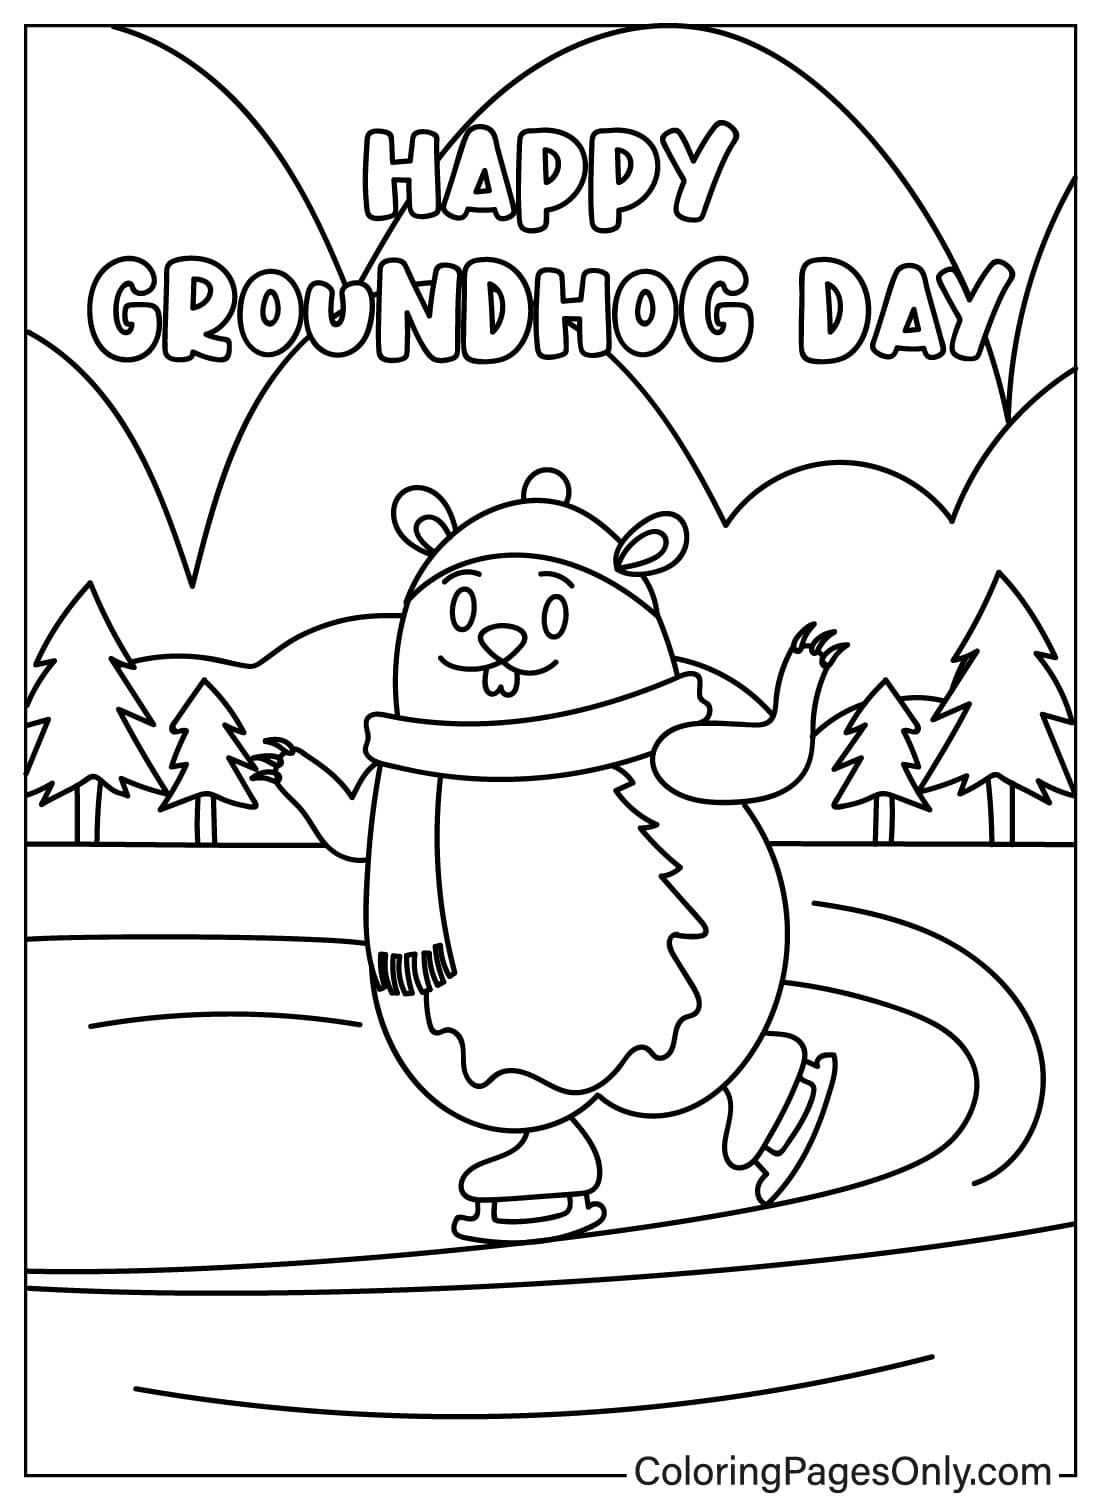 Groundhog Day kleurplaat Gratis van Groundhog Day